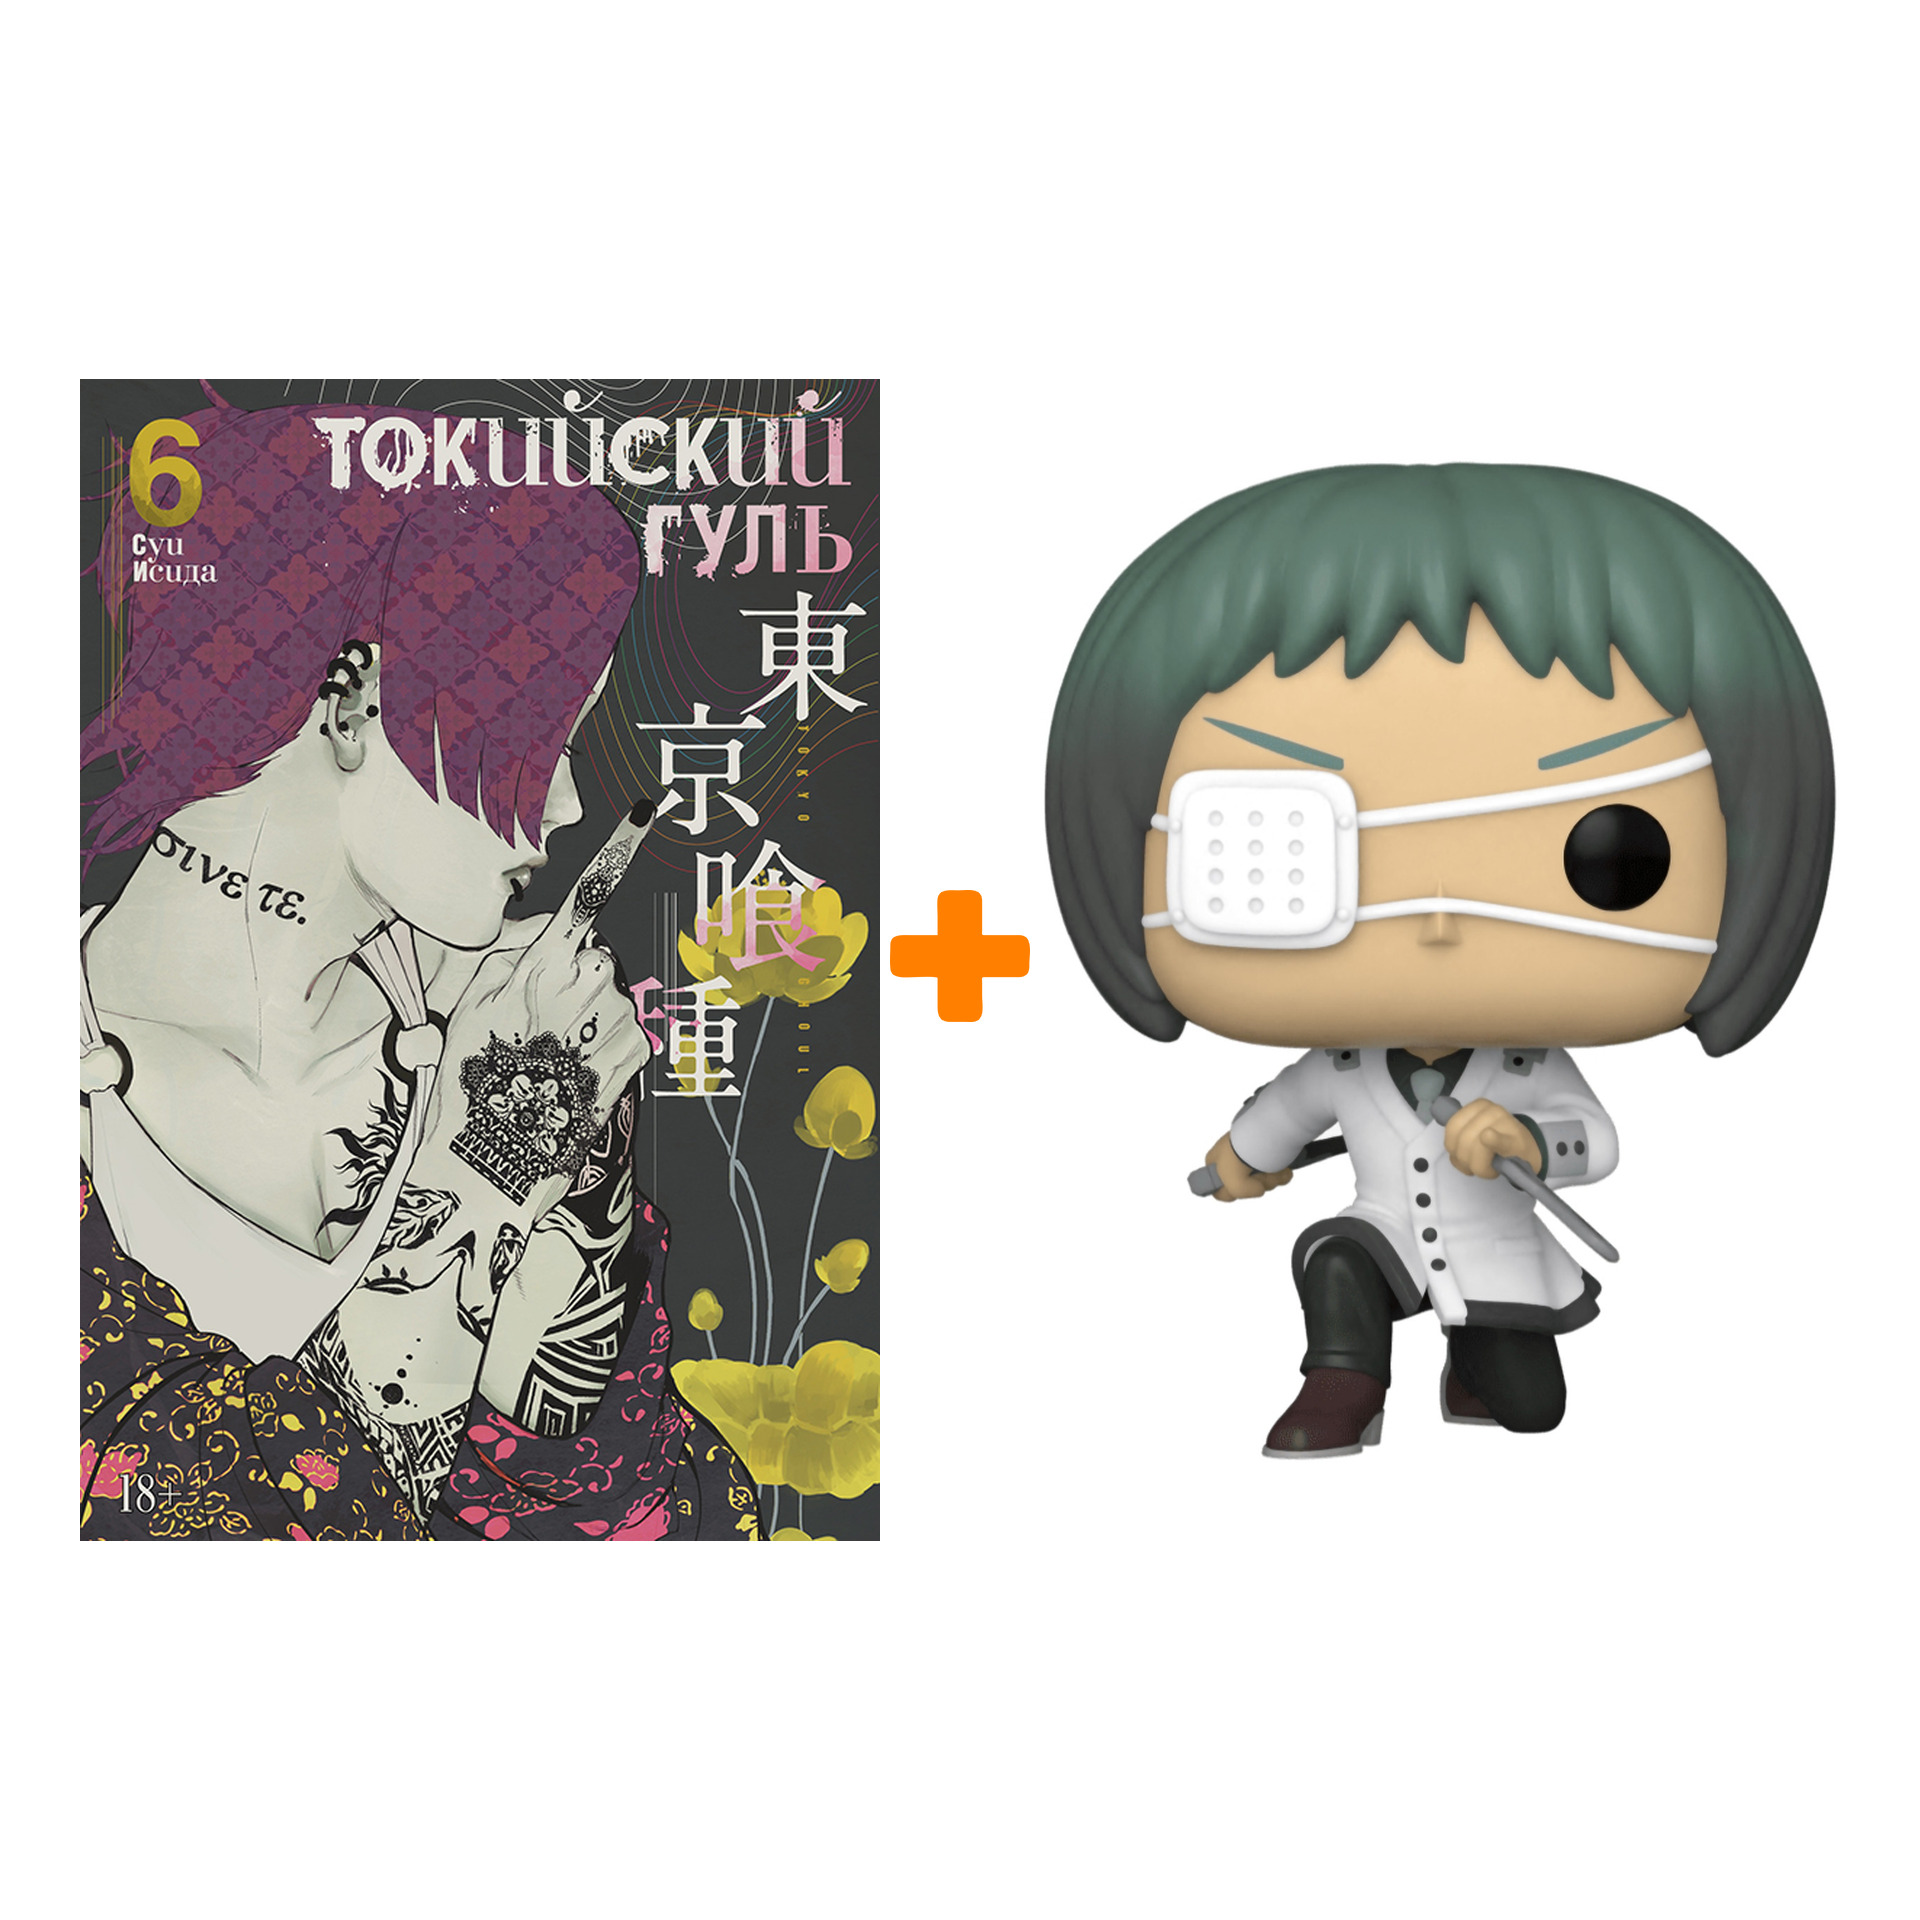 Набор Tokyo Ghoul фигурка Toru Mutsuki + манга Токийский гуль Книга 6